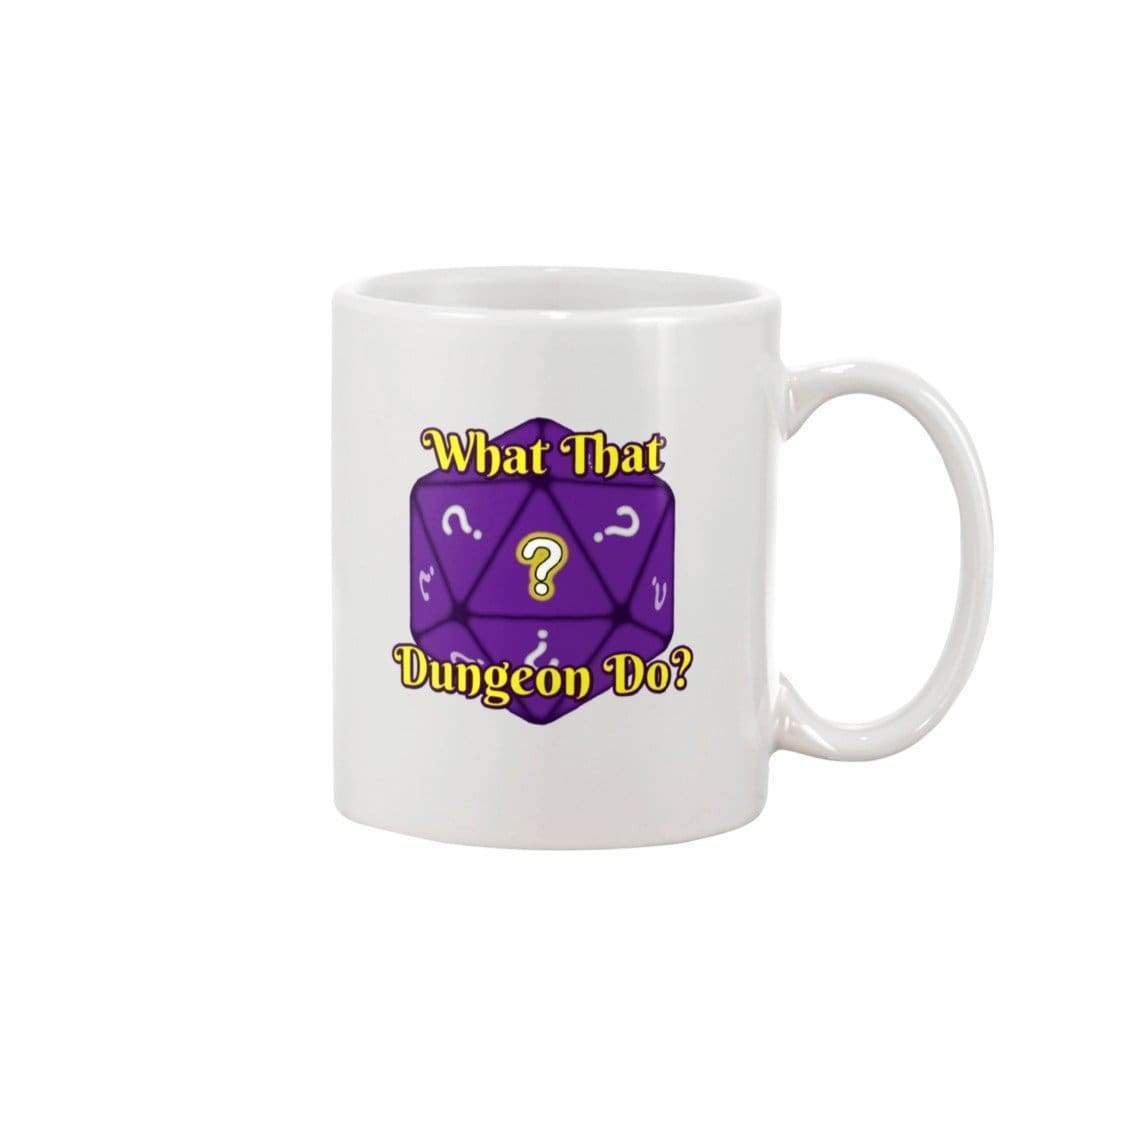 What That Dungeon Do? Podcast Logo 11oz Coffee Mug - Mugs